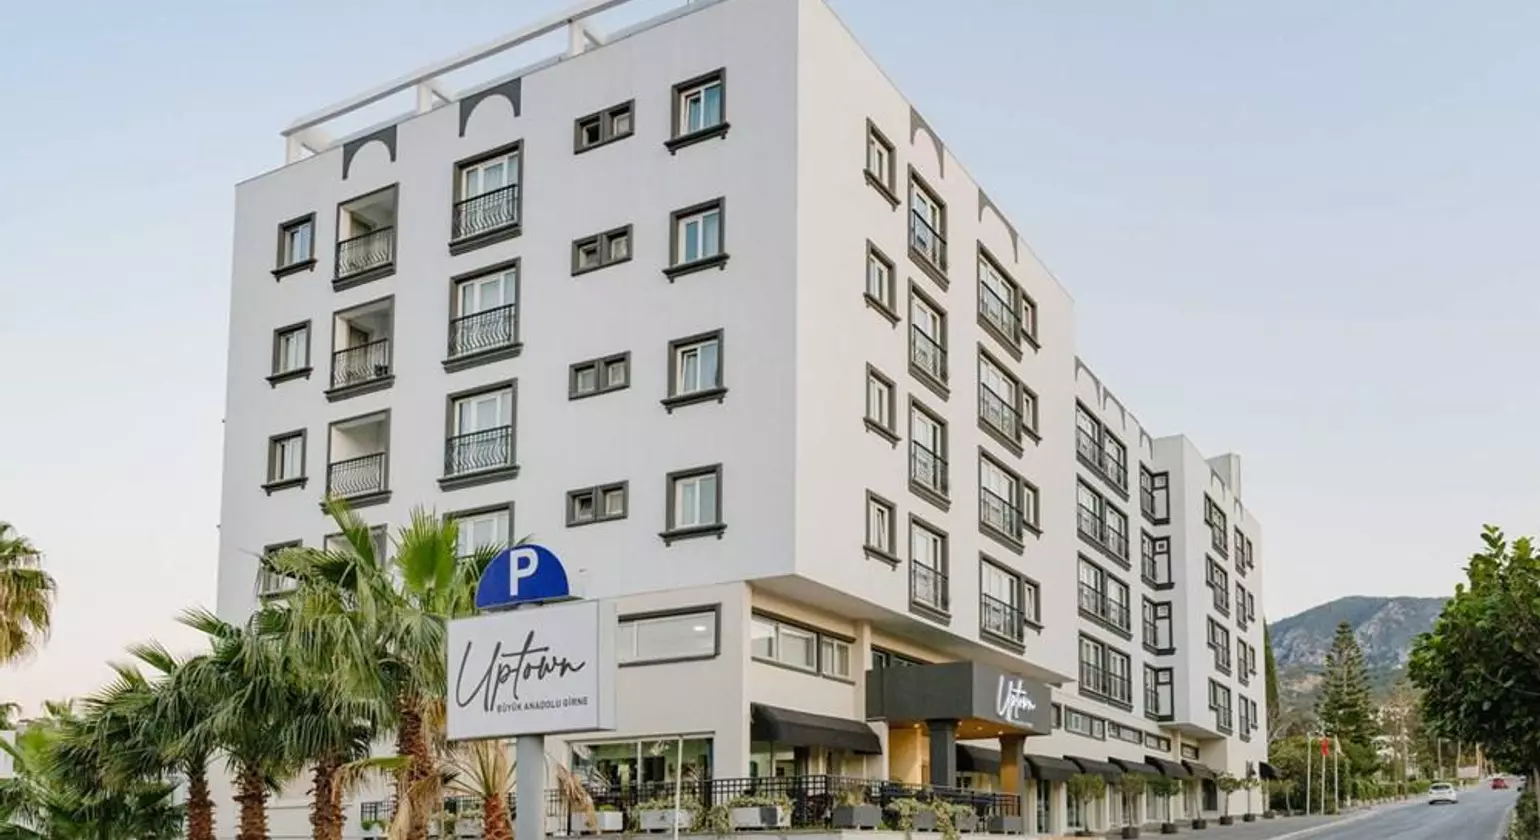 Uptown Büyük Anadolu Hotel Girne